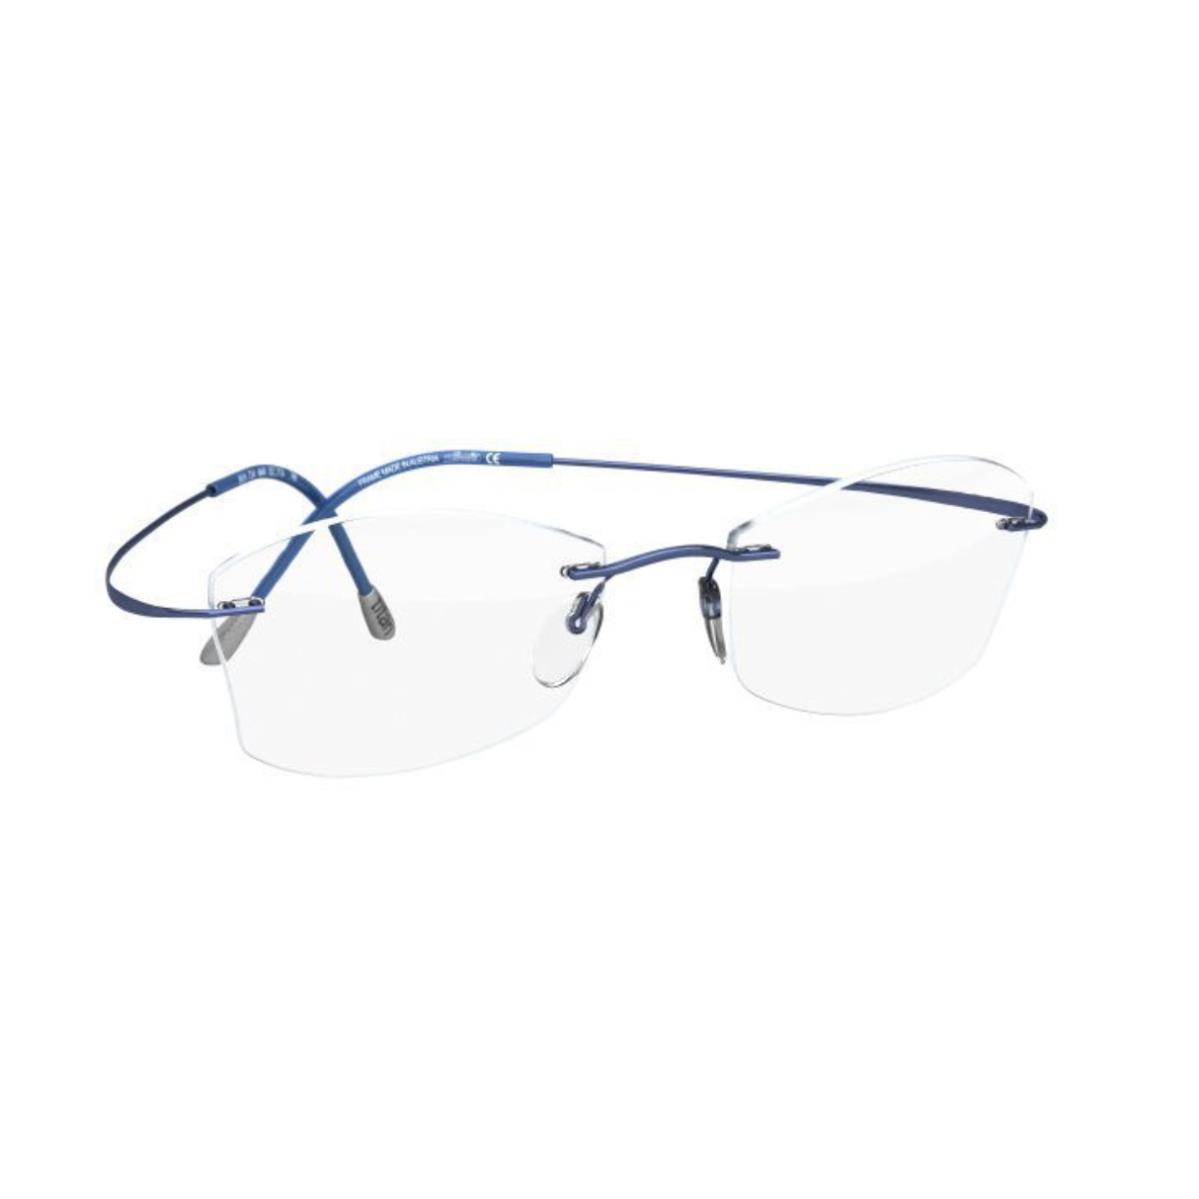 Silhouette 5515 Rimless Eyeglasses Titan Minimal Art The Must Collection Frames INDIGO BLUE - 4640, SIZE: 52-17 140, SHAPE - CW